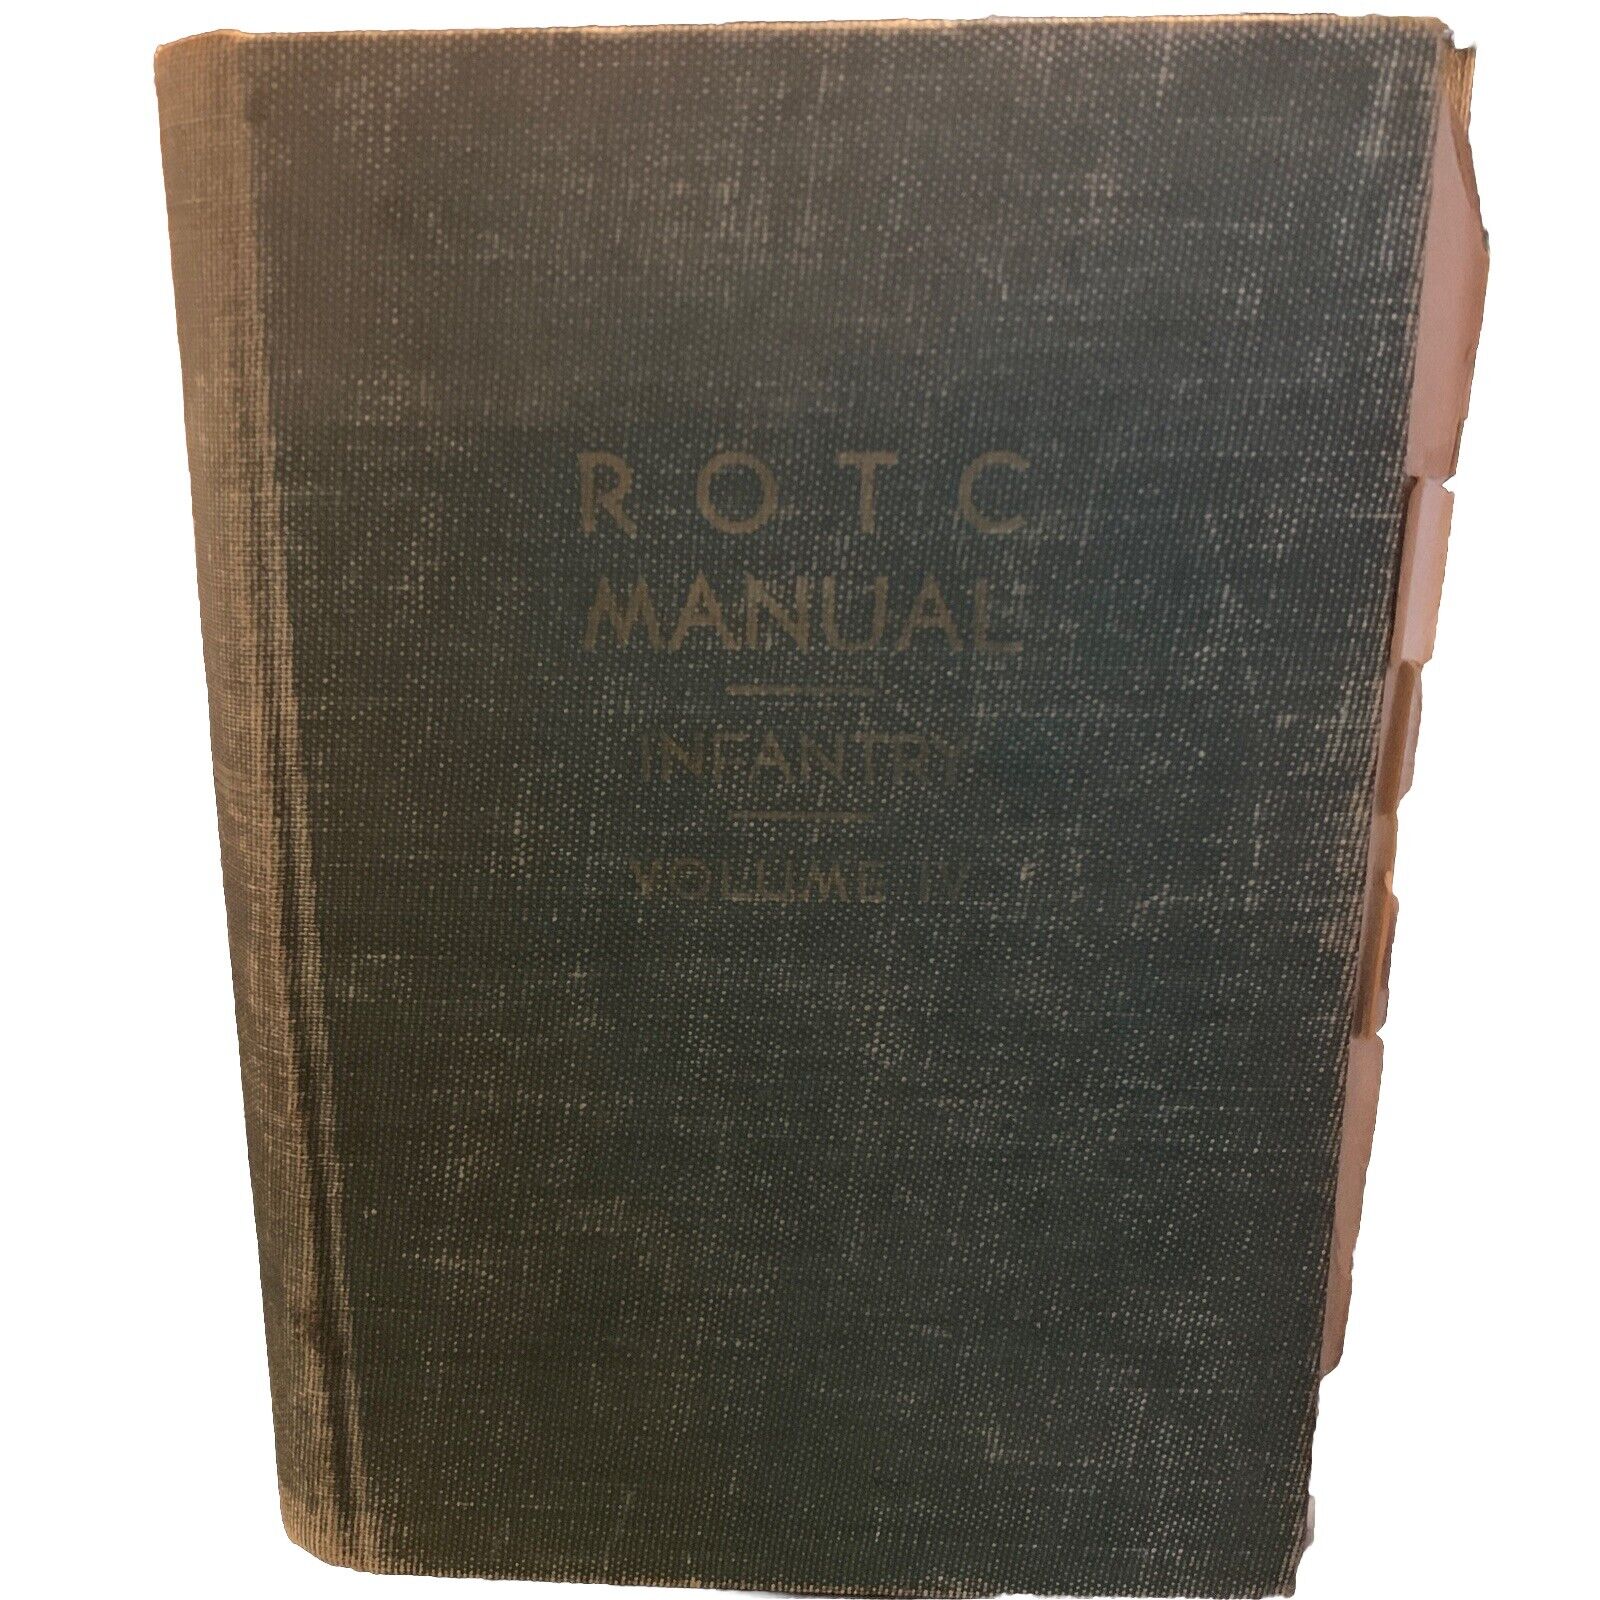 💣vintage 1949 ROTC Manual infantry volume iv November 1st Edition